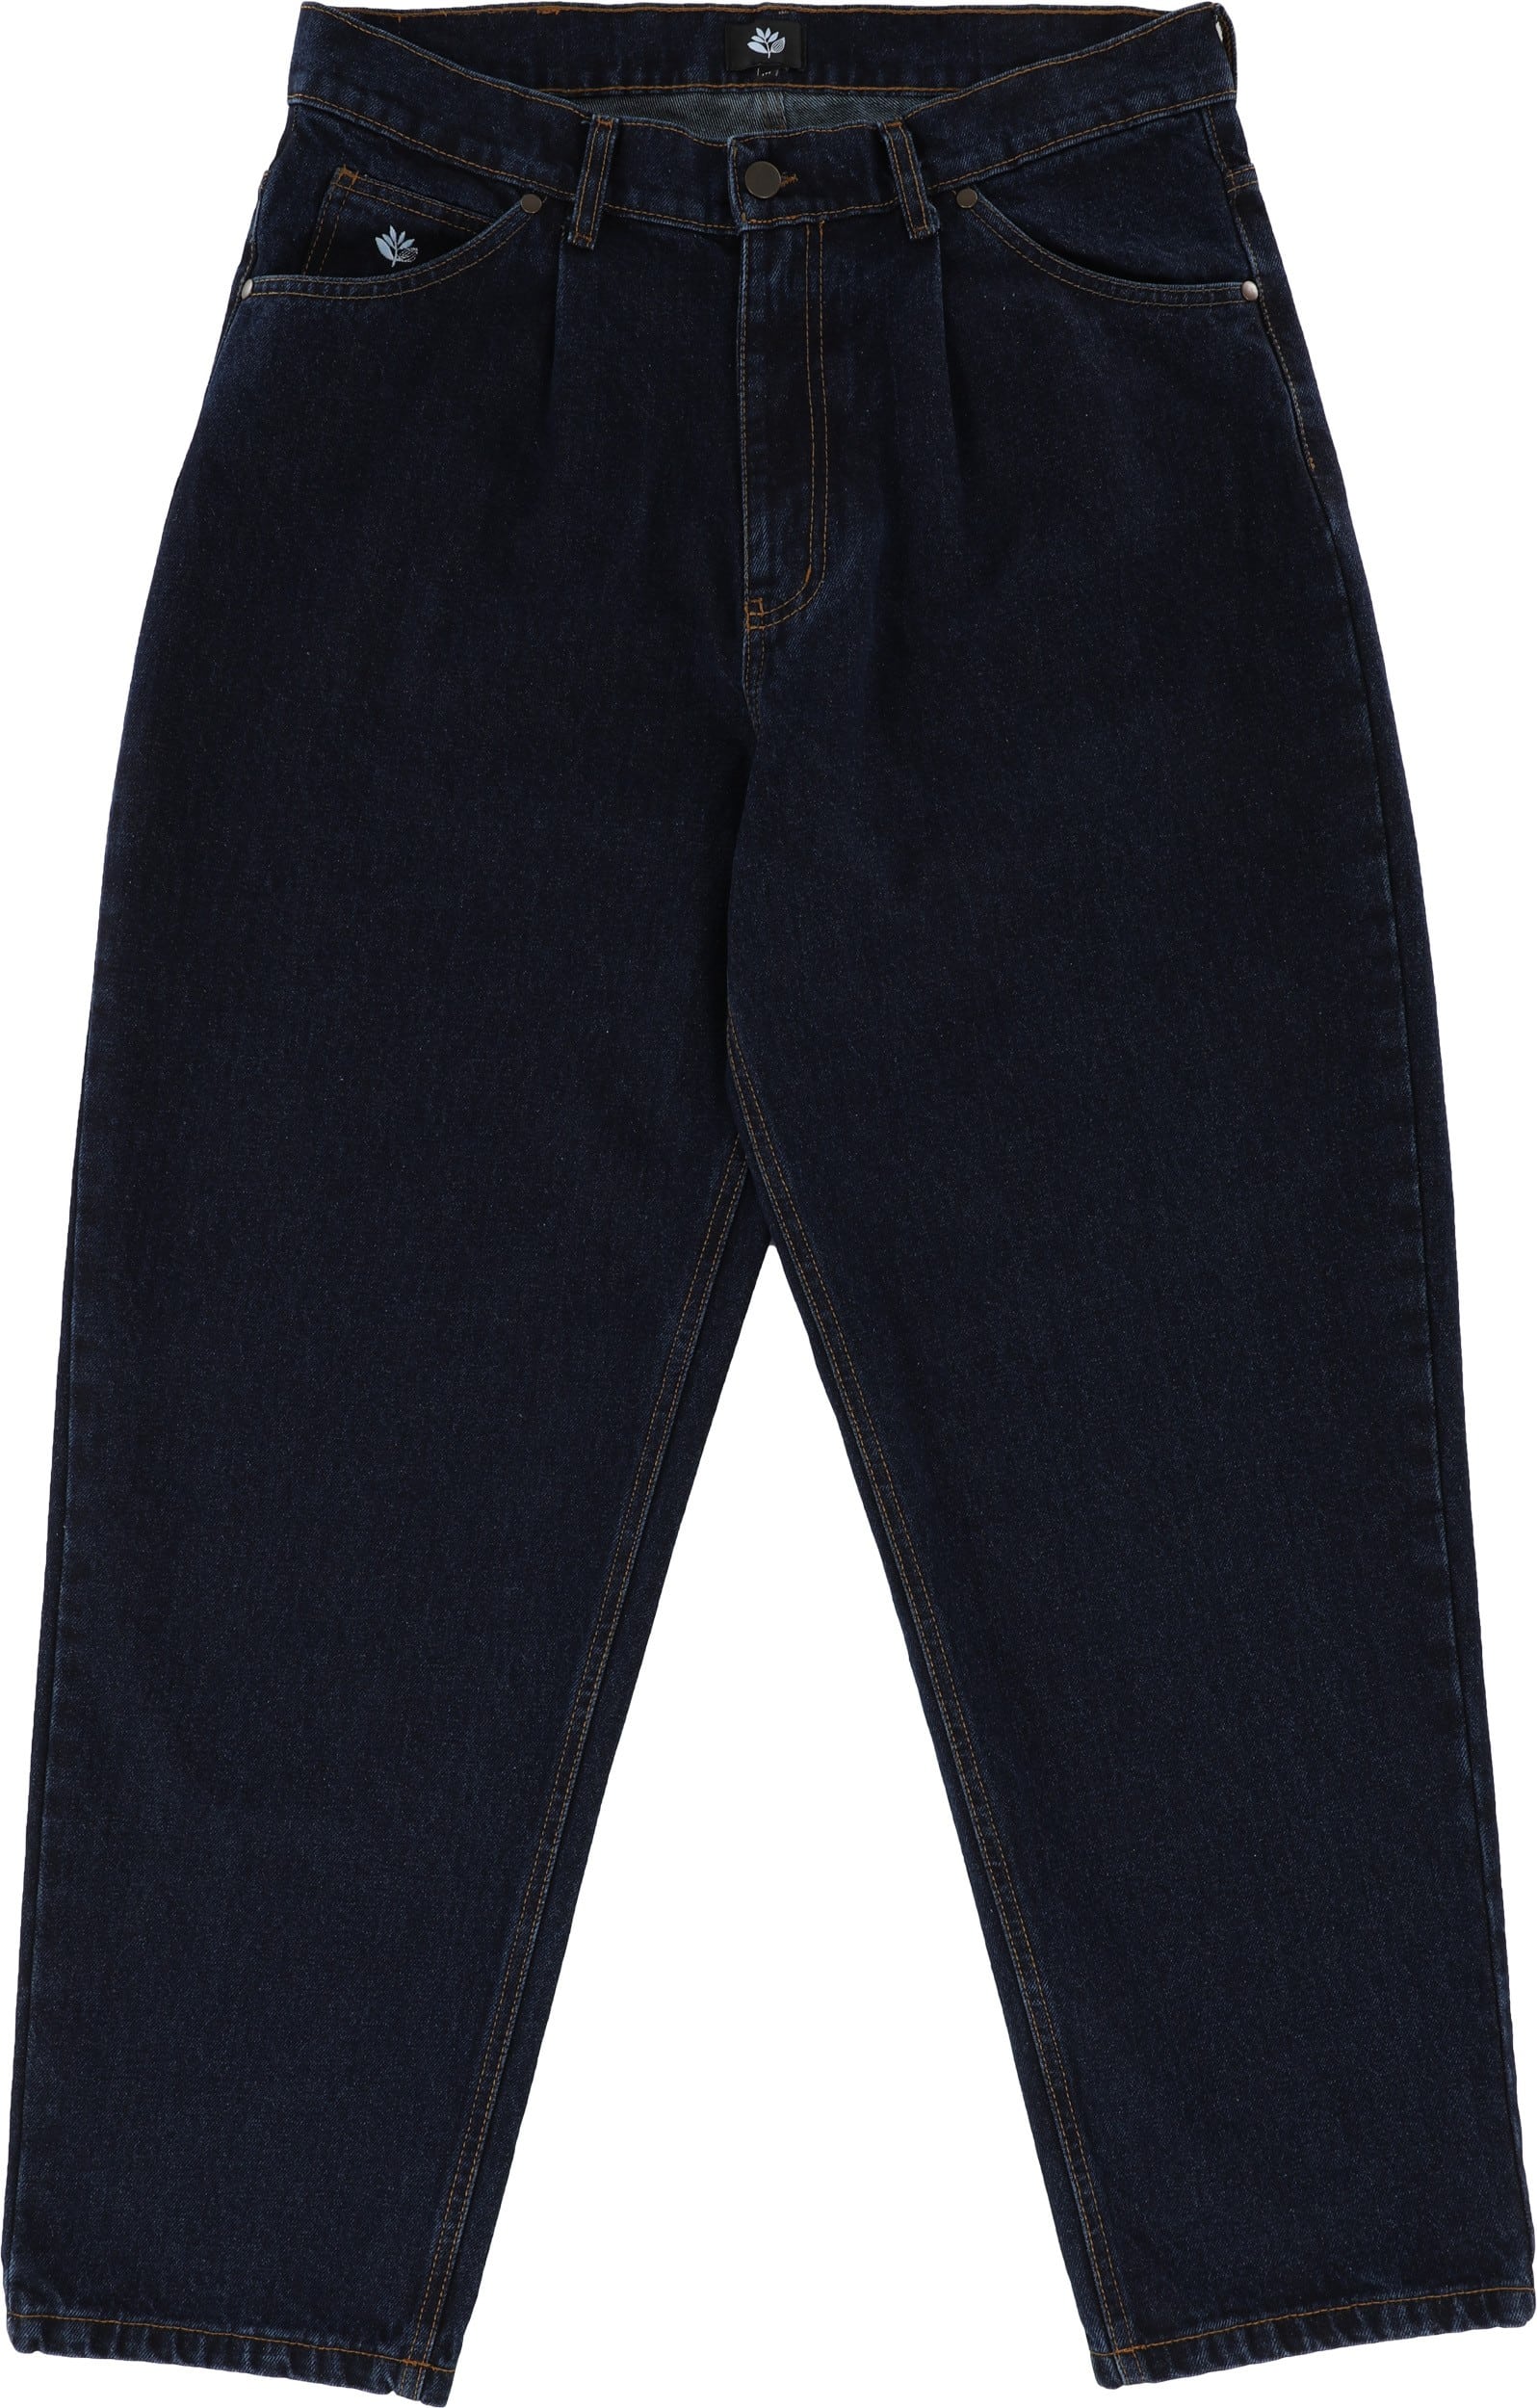 Magenta OG Denim Jeans - dark blue - Free Shipping | Tactics